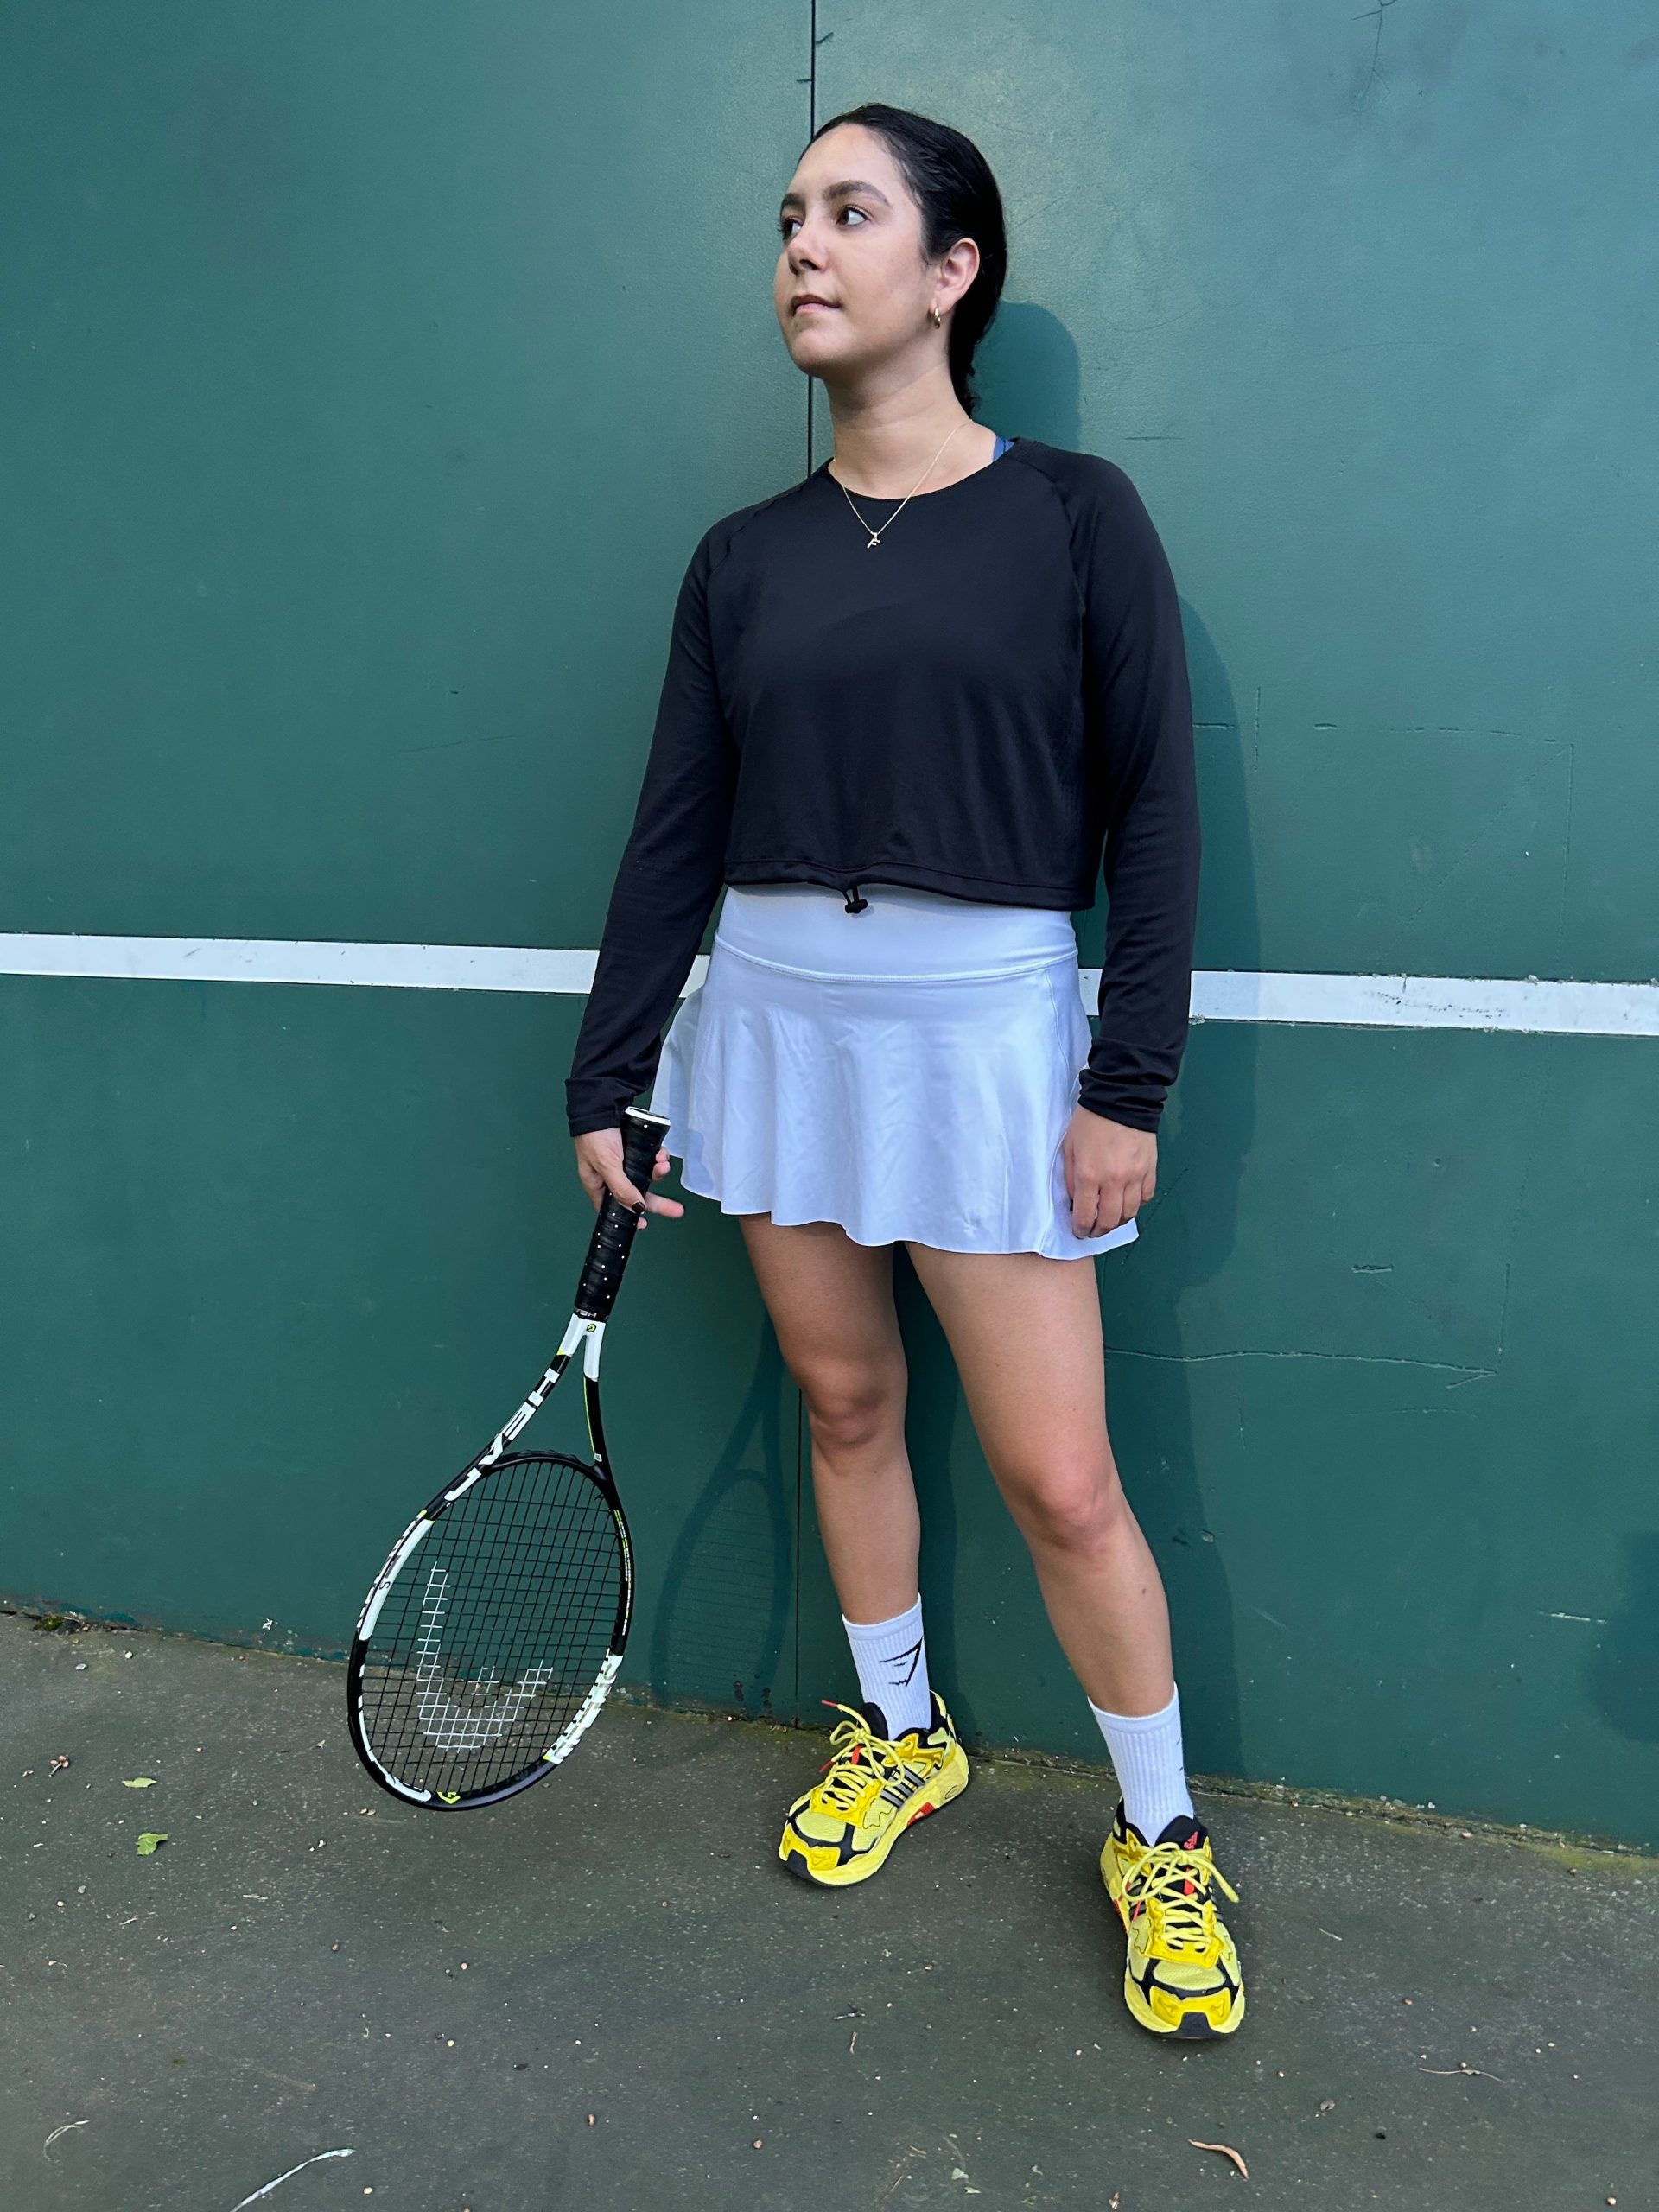 Best tennis skirts